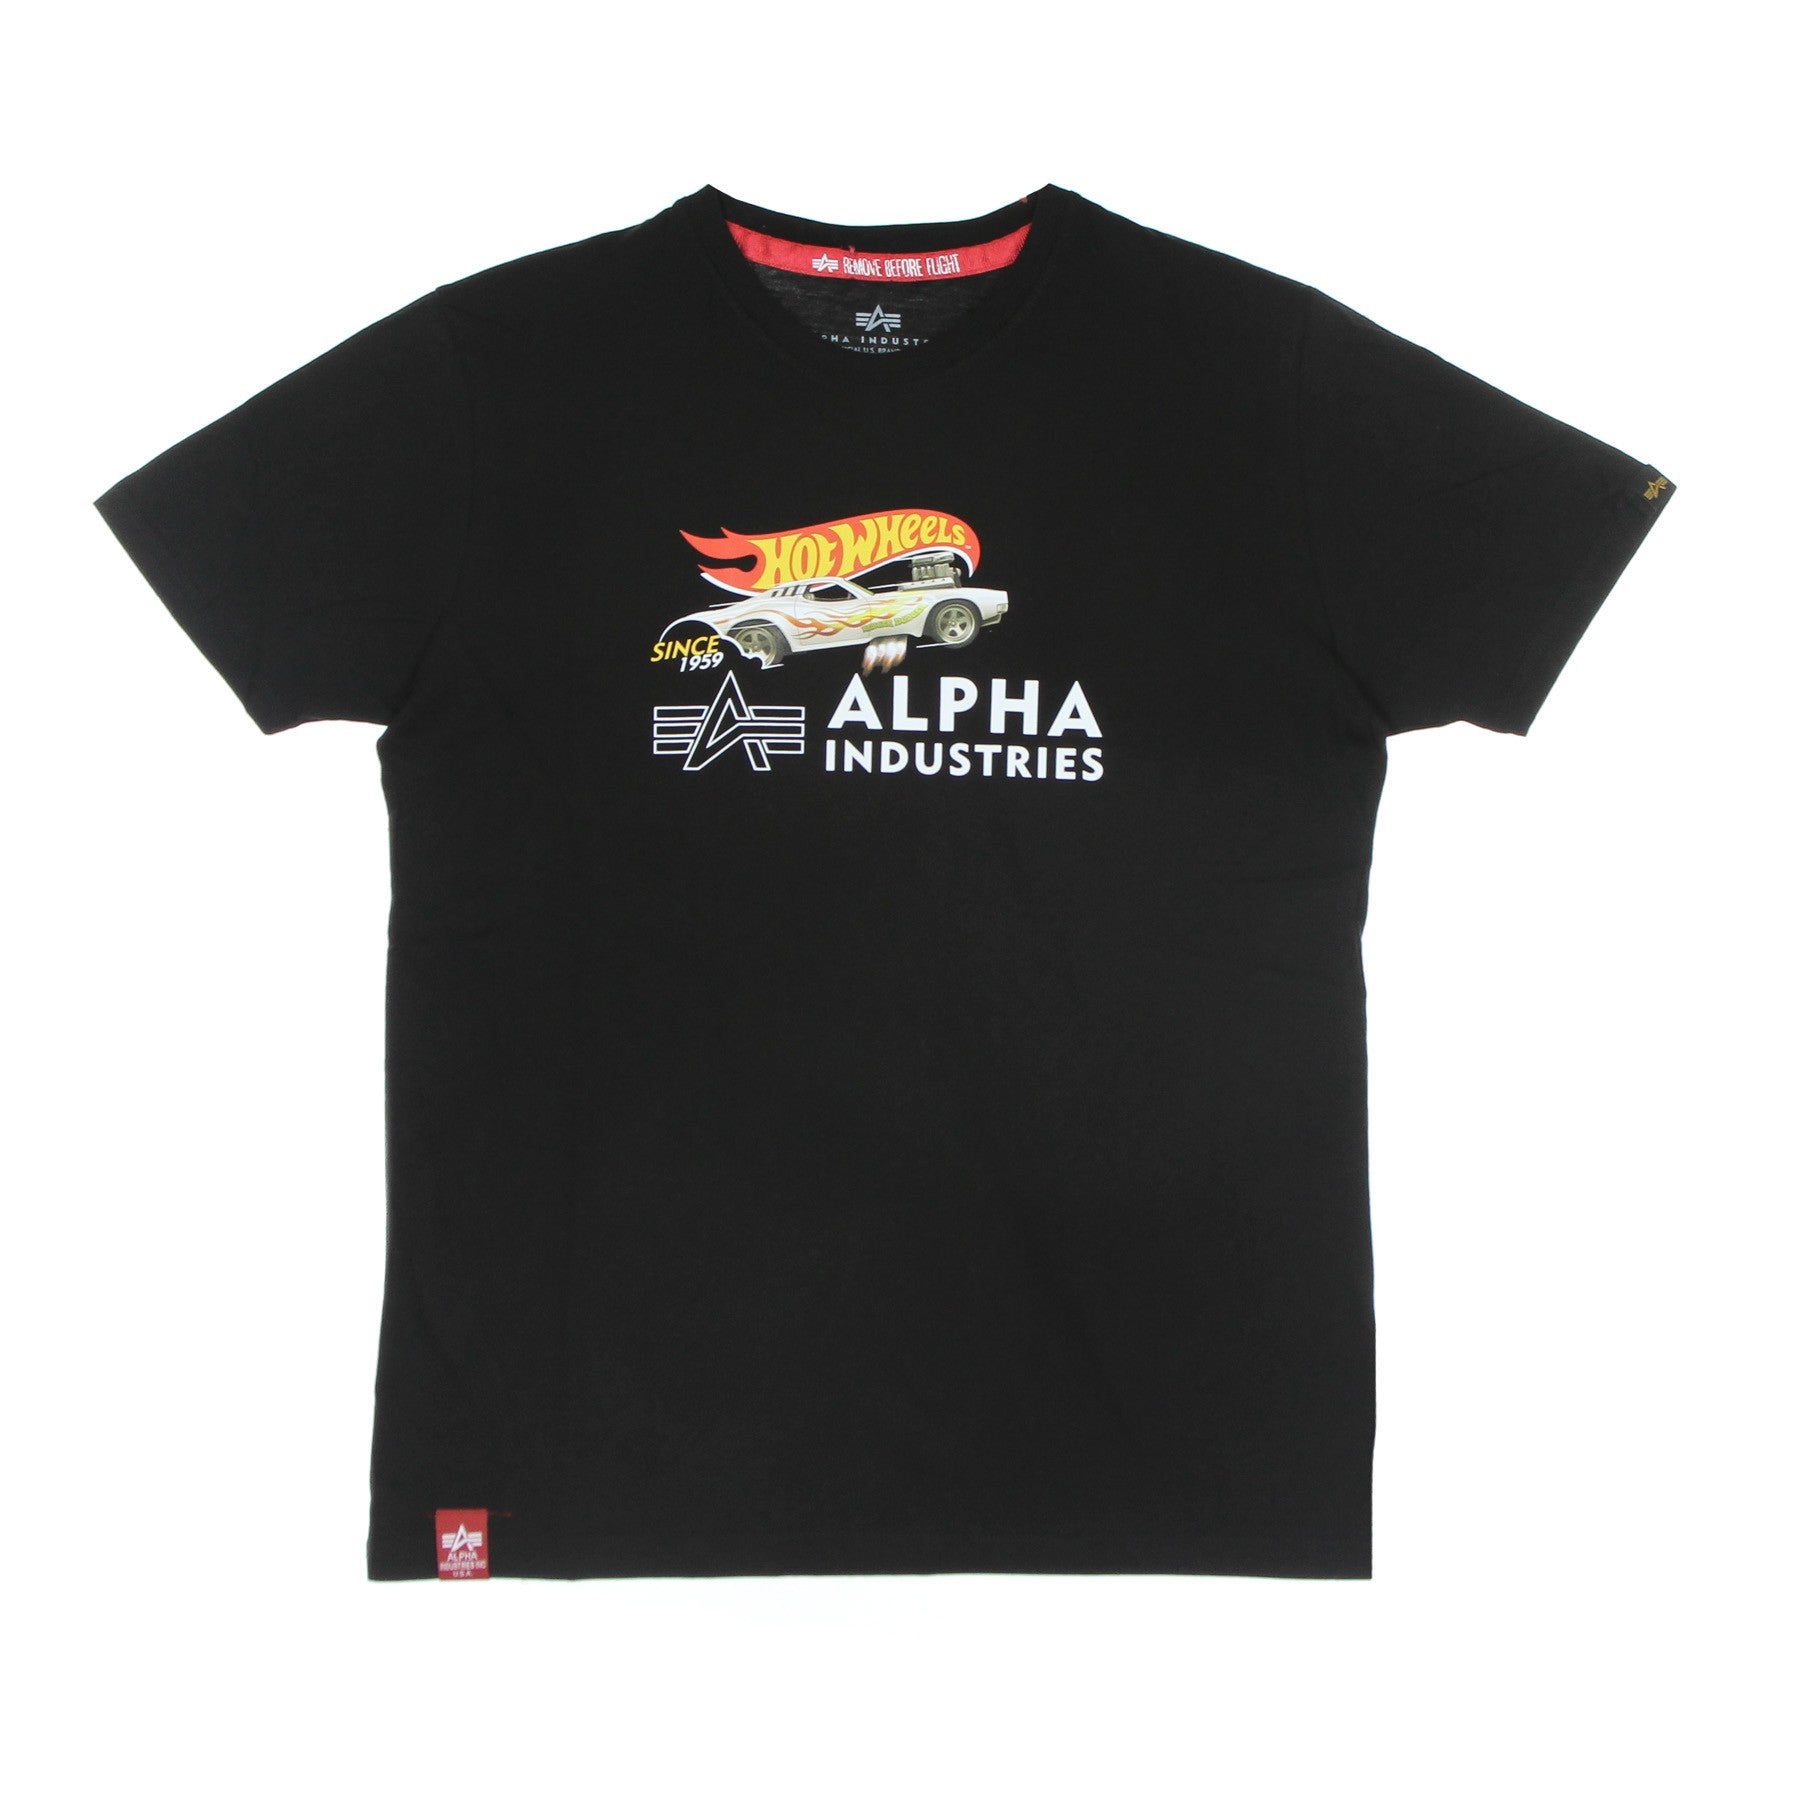 Alpha Industries, Maglietta Uomo Rodger Dodger Tee X Hot Wheels, Black